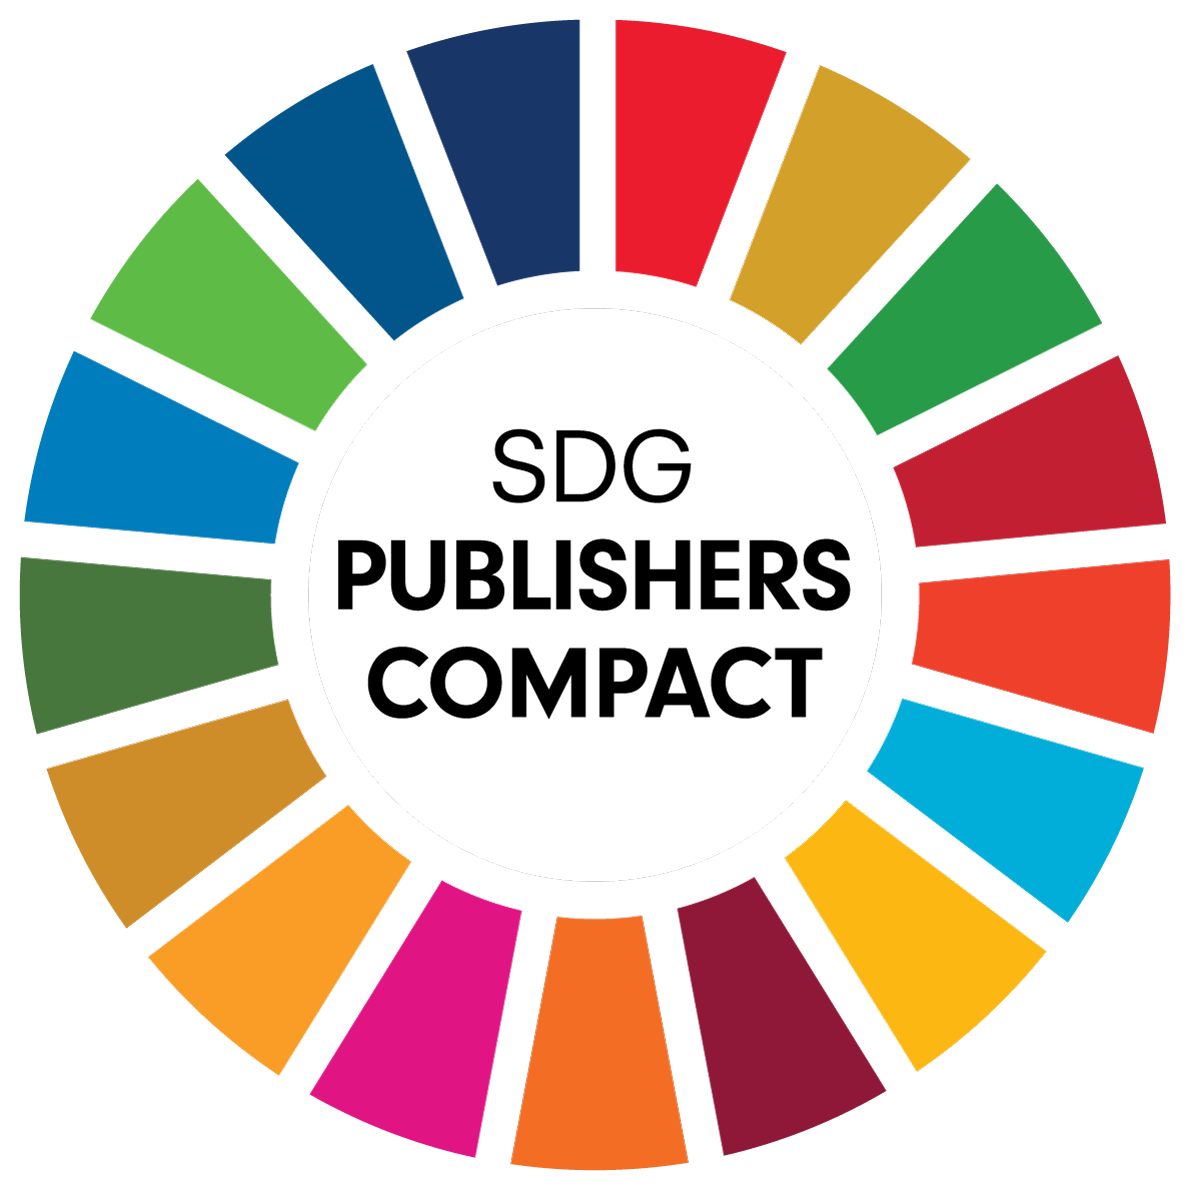 SDG Publishers compact logo